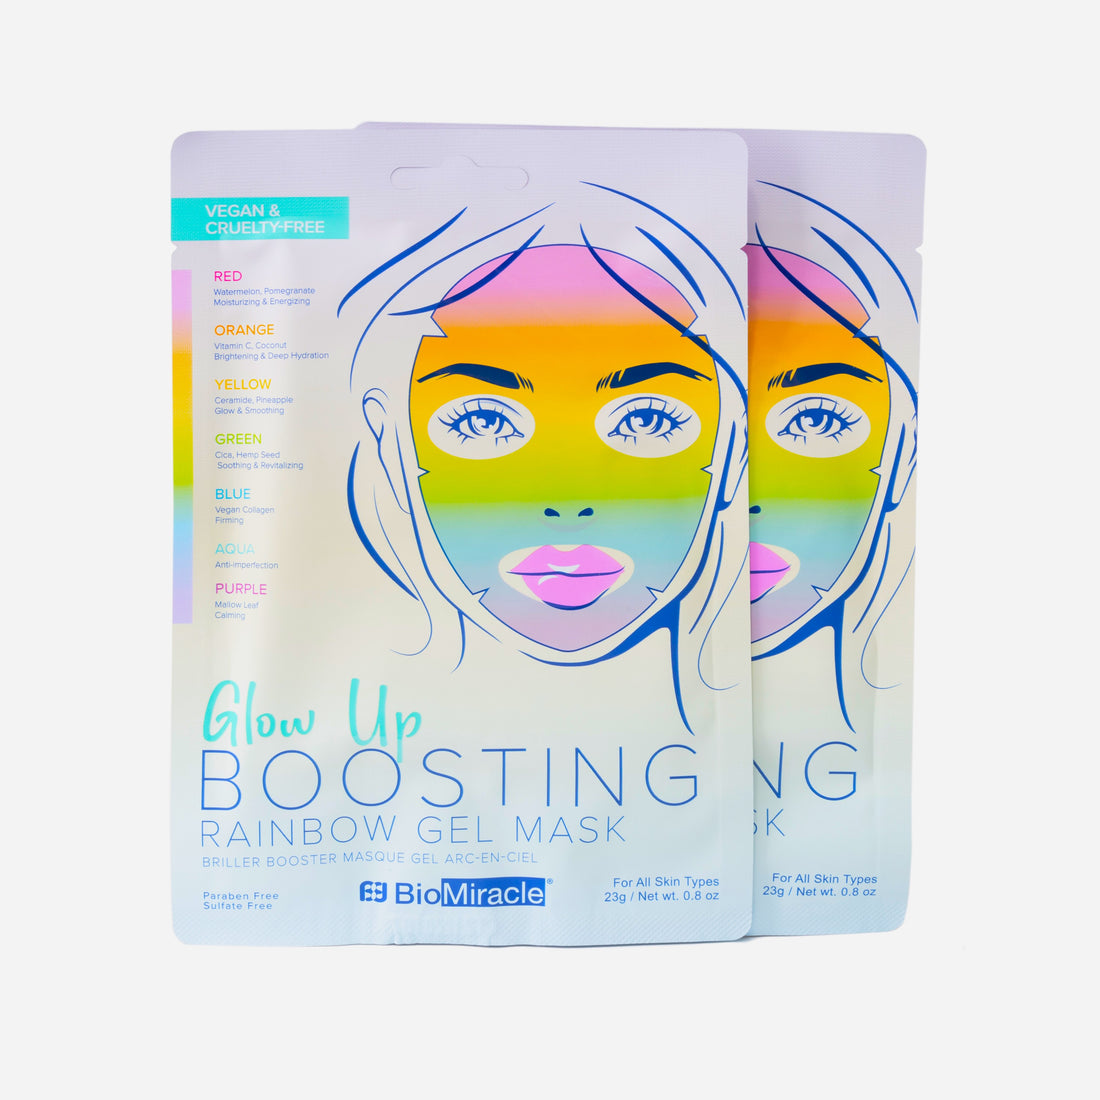 Glow Up Boosting Rainbow Gel Mask-2 Pack